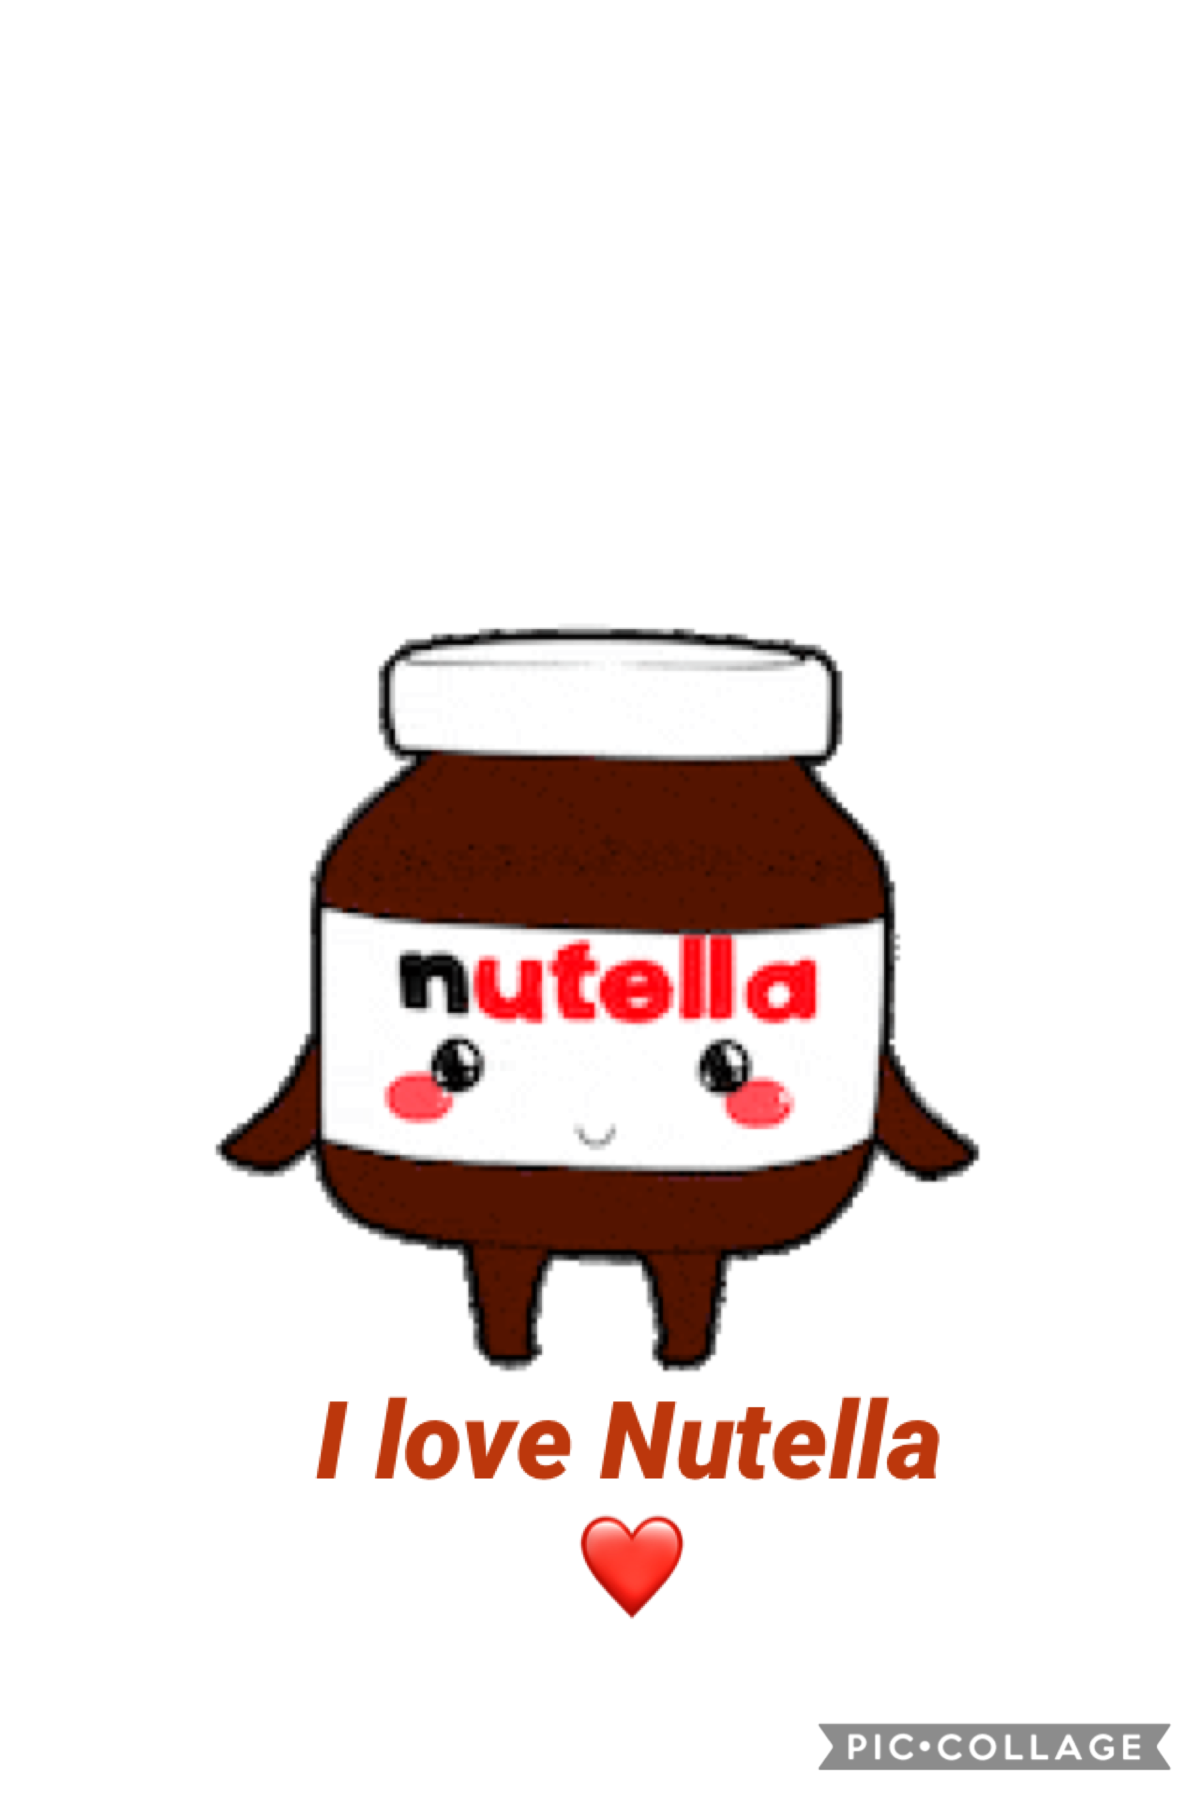 Nutella is my destiny 